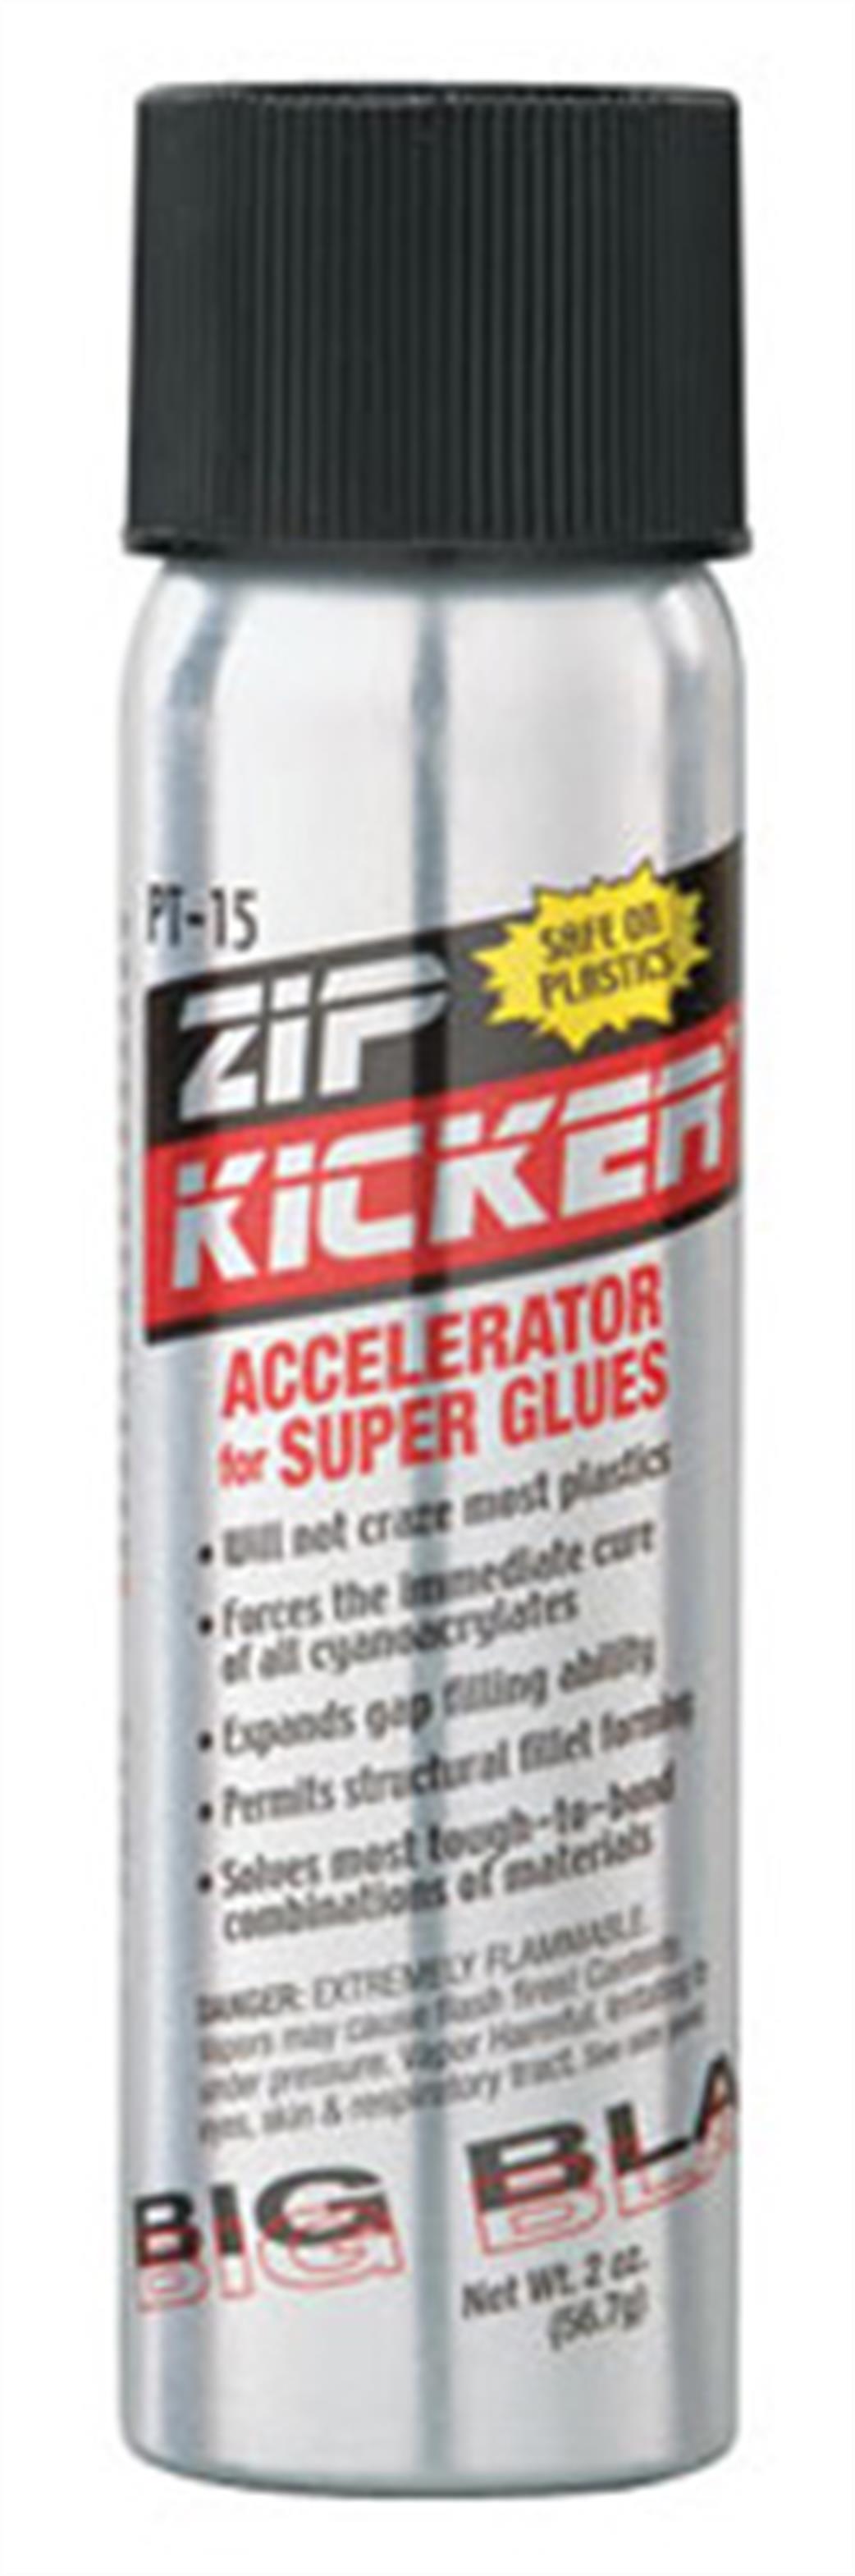 Pacer PT15 Zap Zip Kicker Accelerator for Super Glues 2oz Aerosol